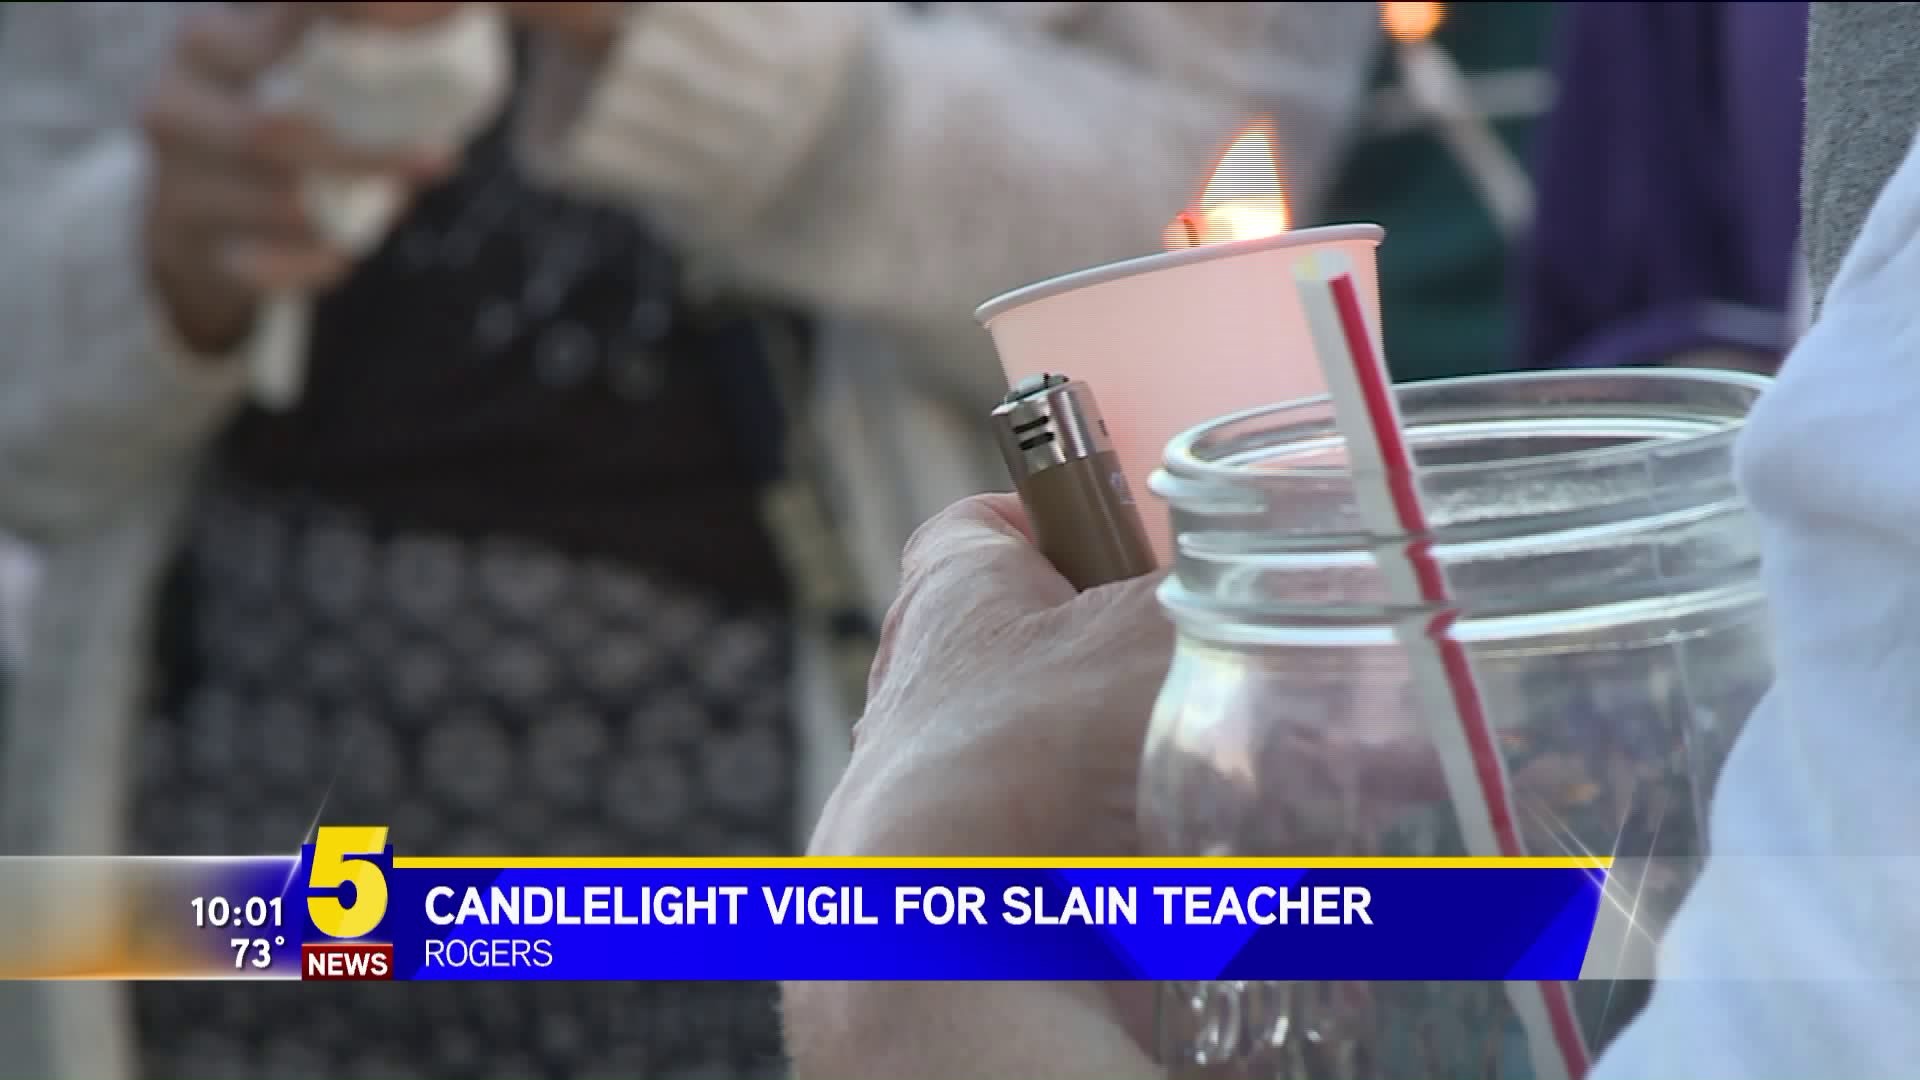 Candlelight Vigil For Slain Teacher